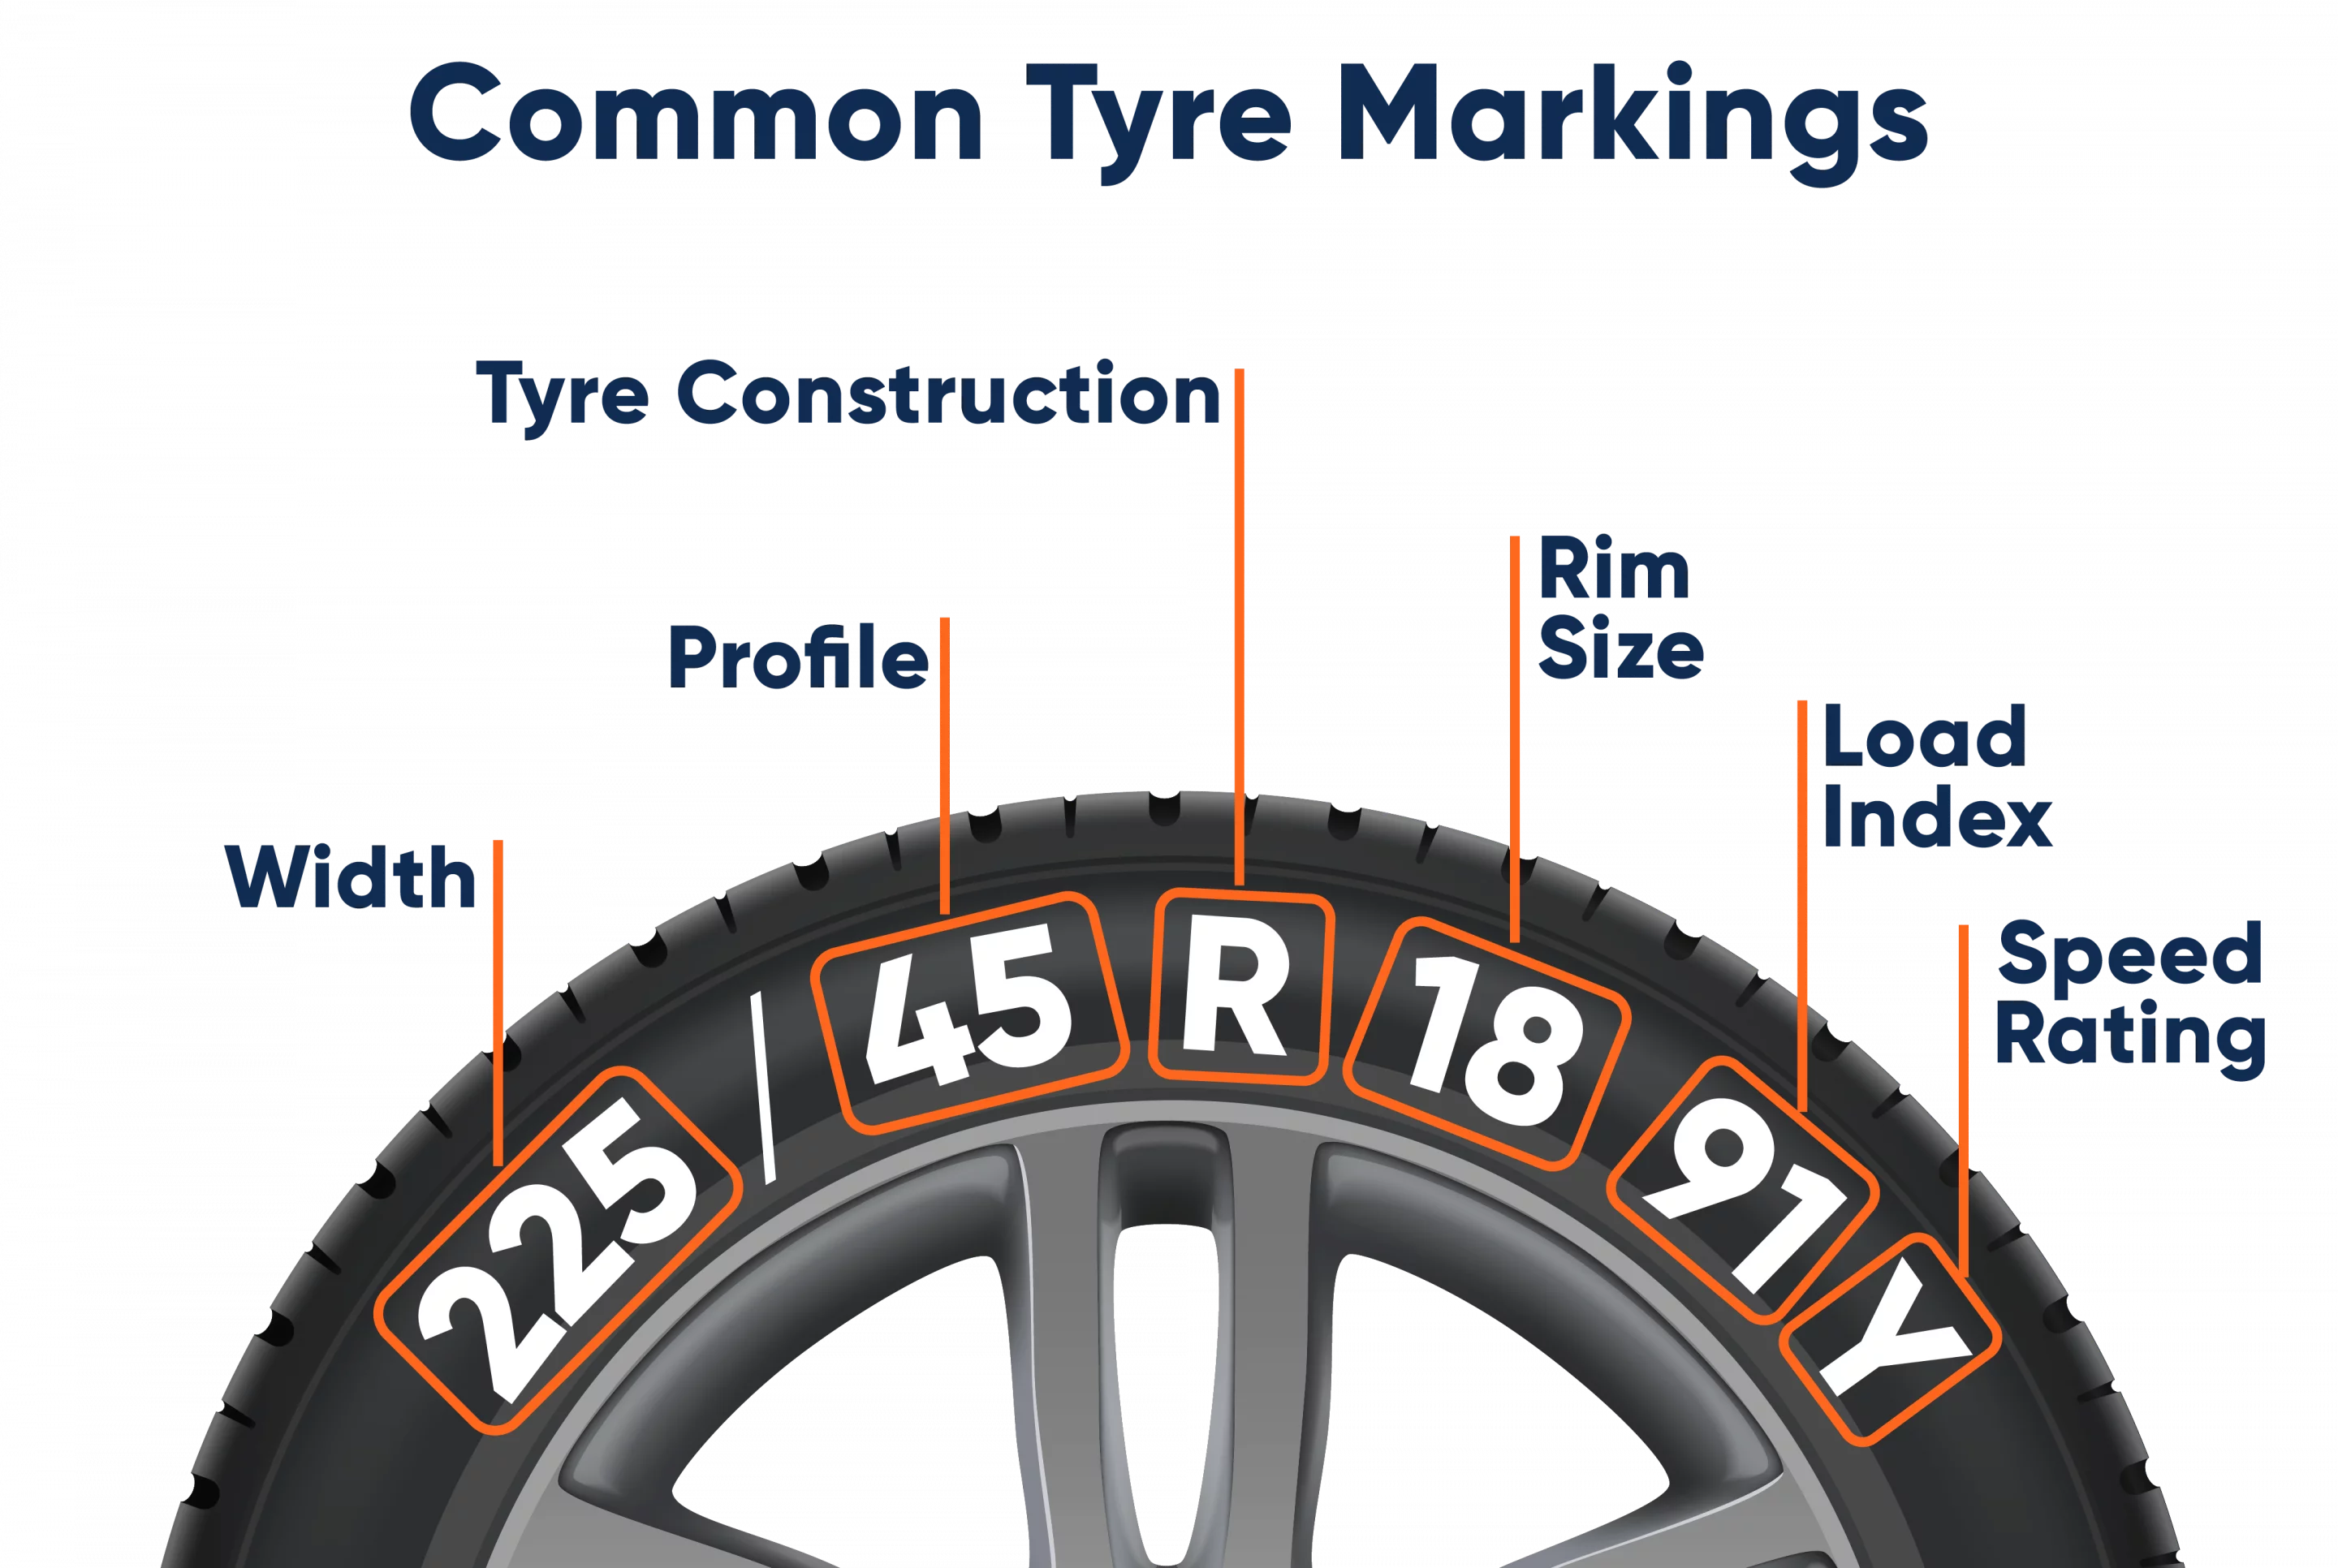 Common Tyre Marking